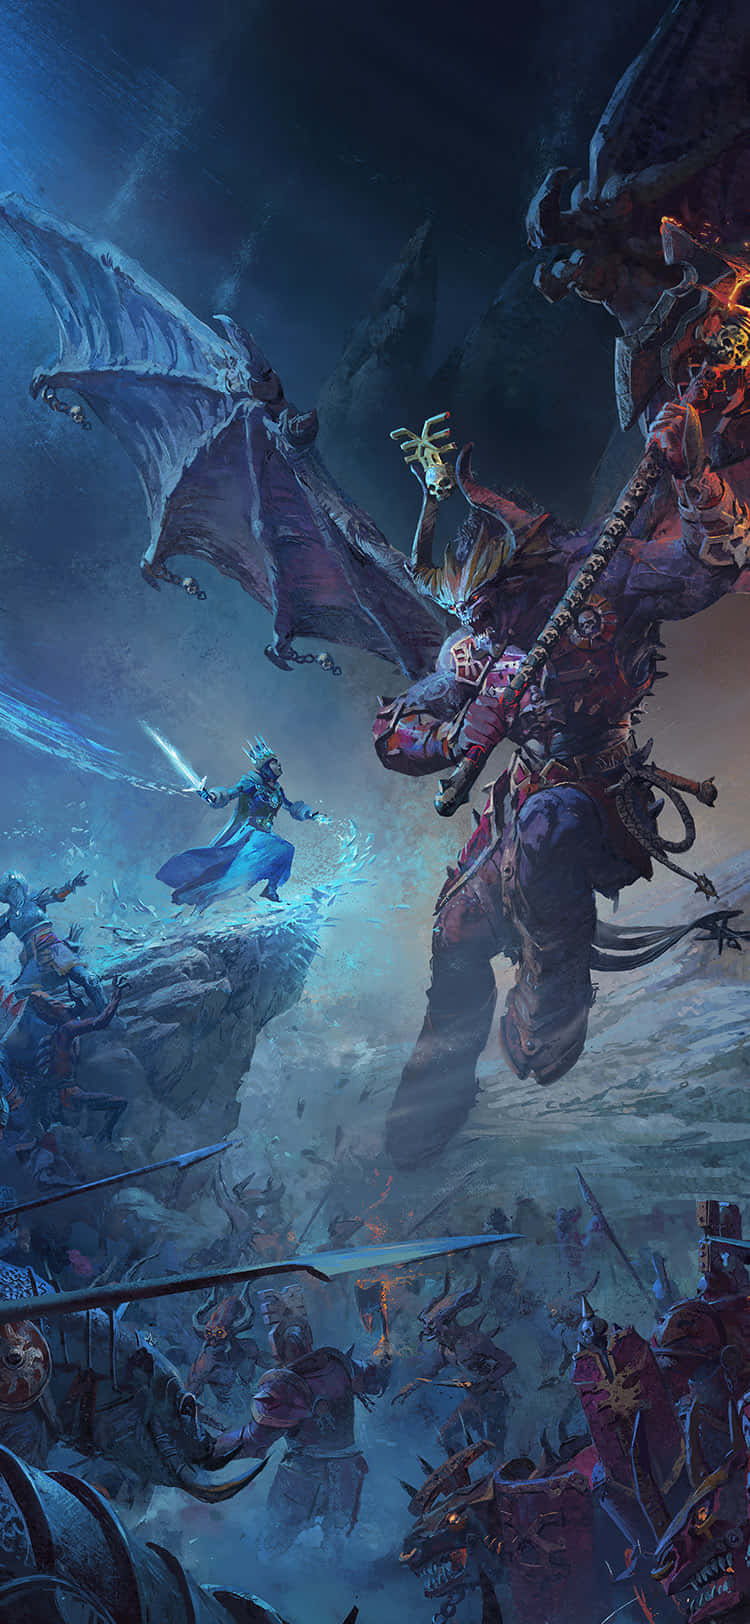 Besegrariket Med Total War: Warhammer Ii Fight På Iphone X.